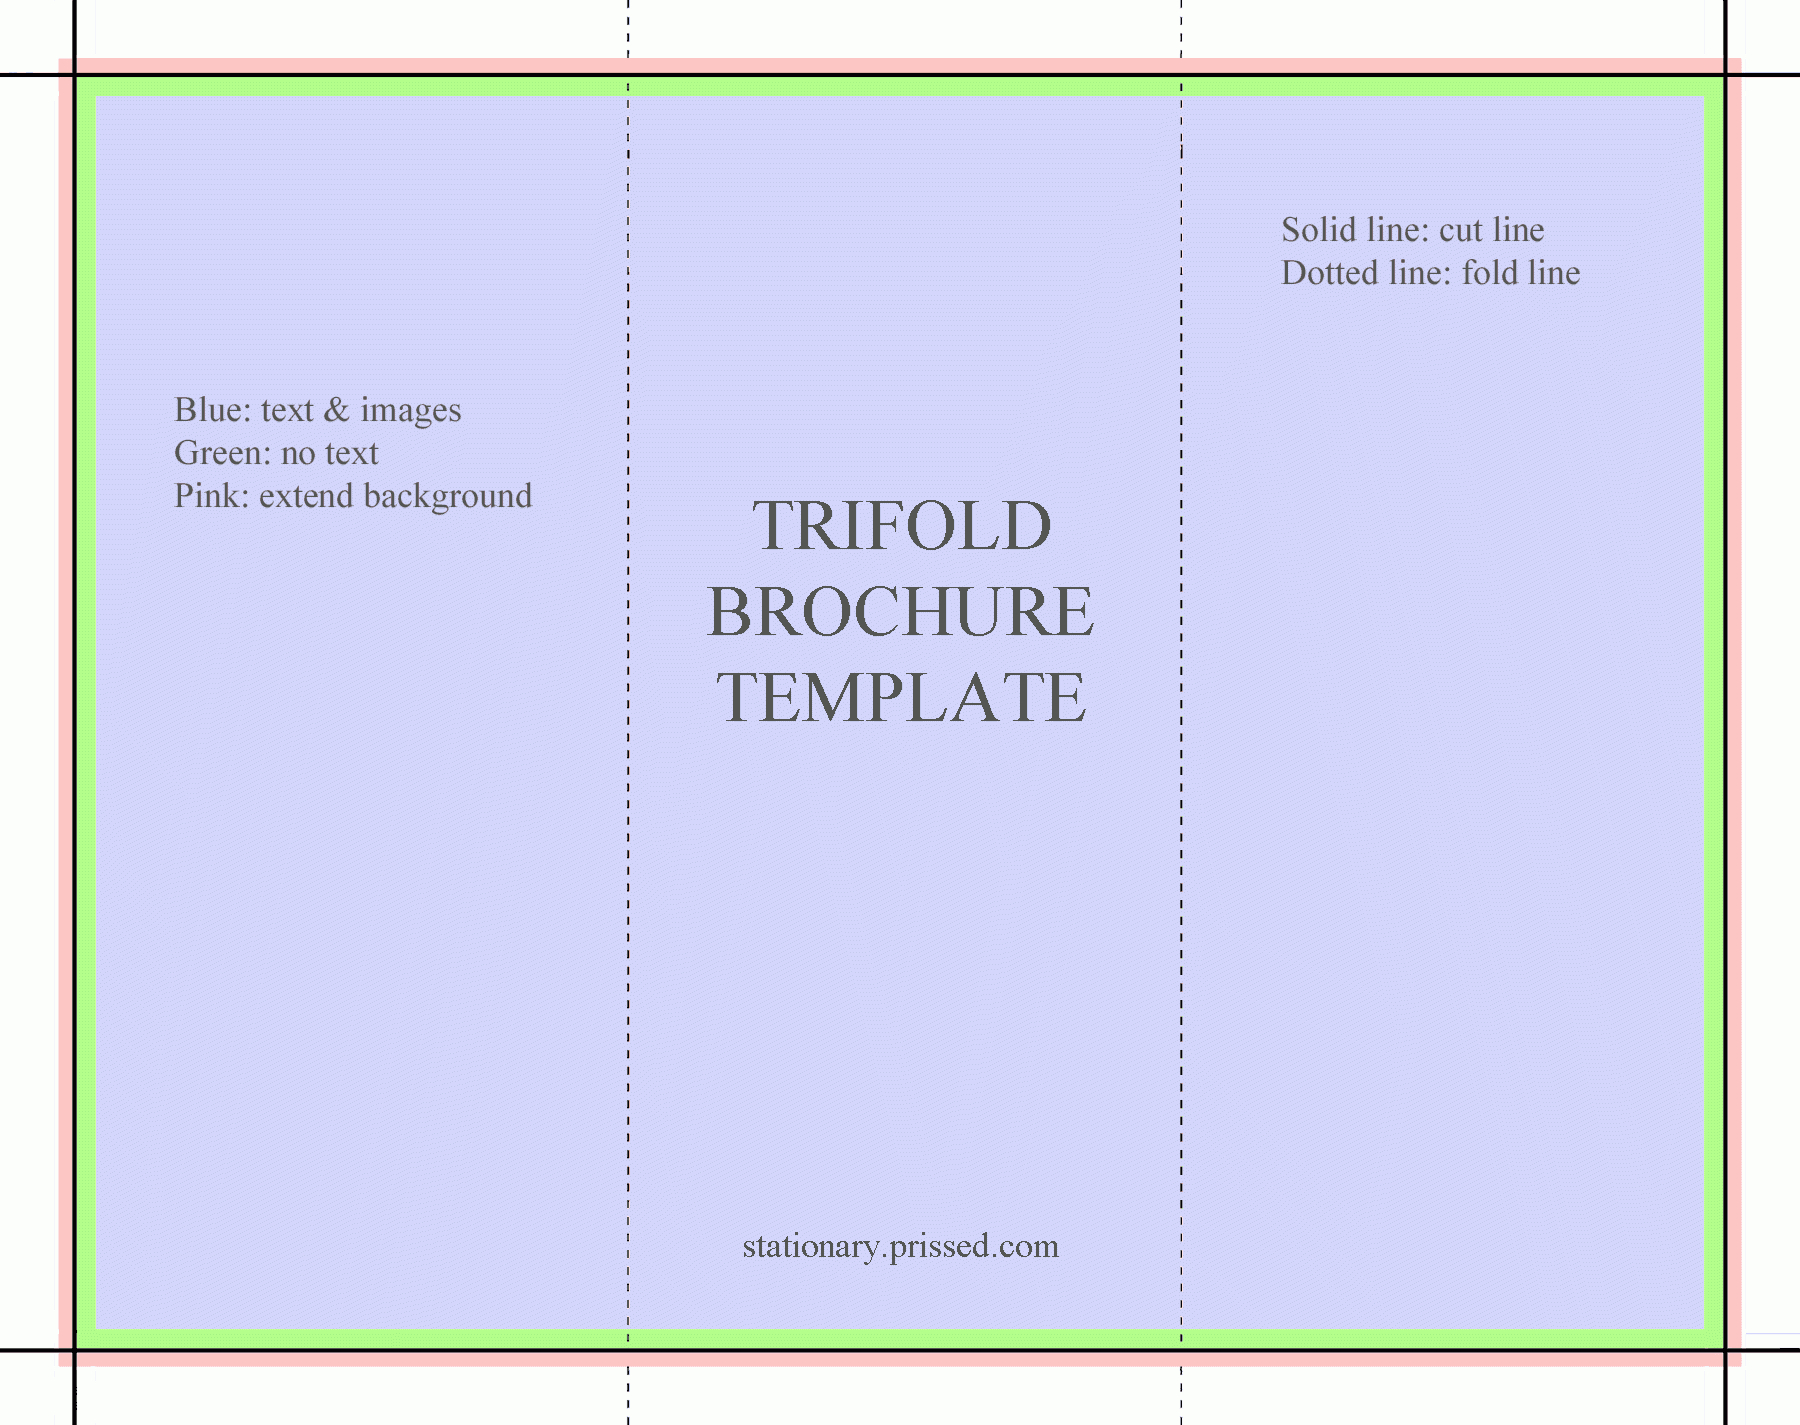 Free Online Brochure Templates | Free Blank Templates For Throughout Free Online Tri Fold Brochure Template